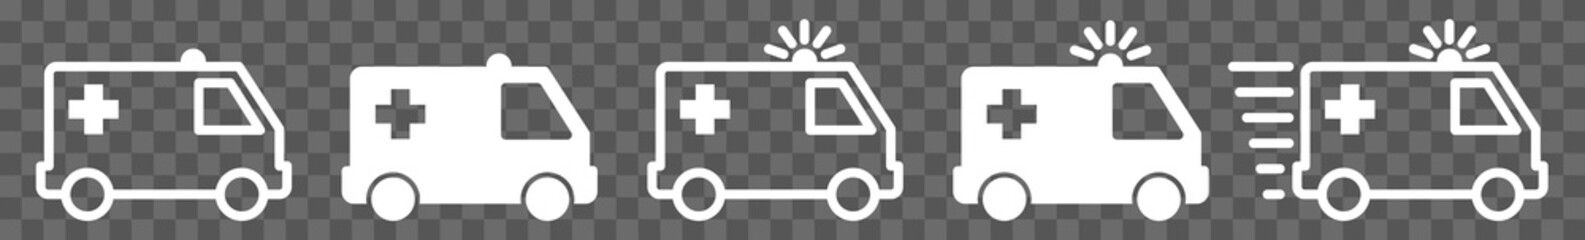 Ambulance Icon White | Medical Emergency Illustration | Alert Patient Transport Symbol | Siren Vehicle Logo | Fast Transportation Sign | Isolated | Variations